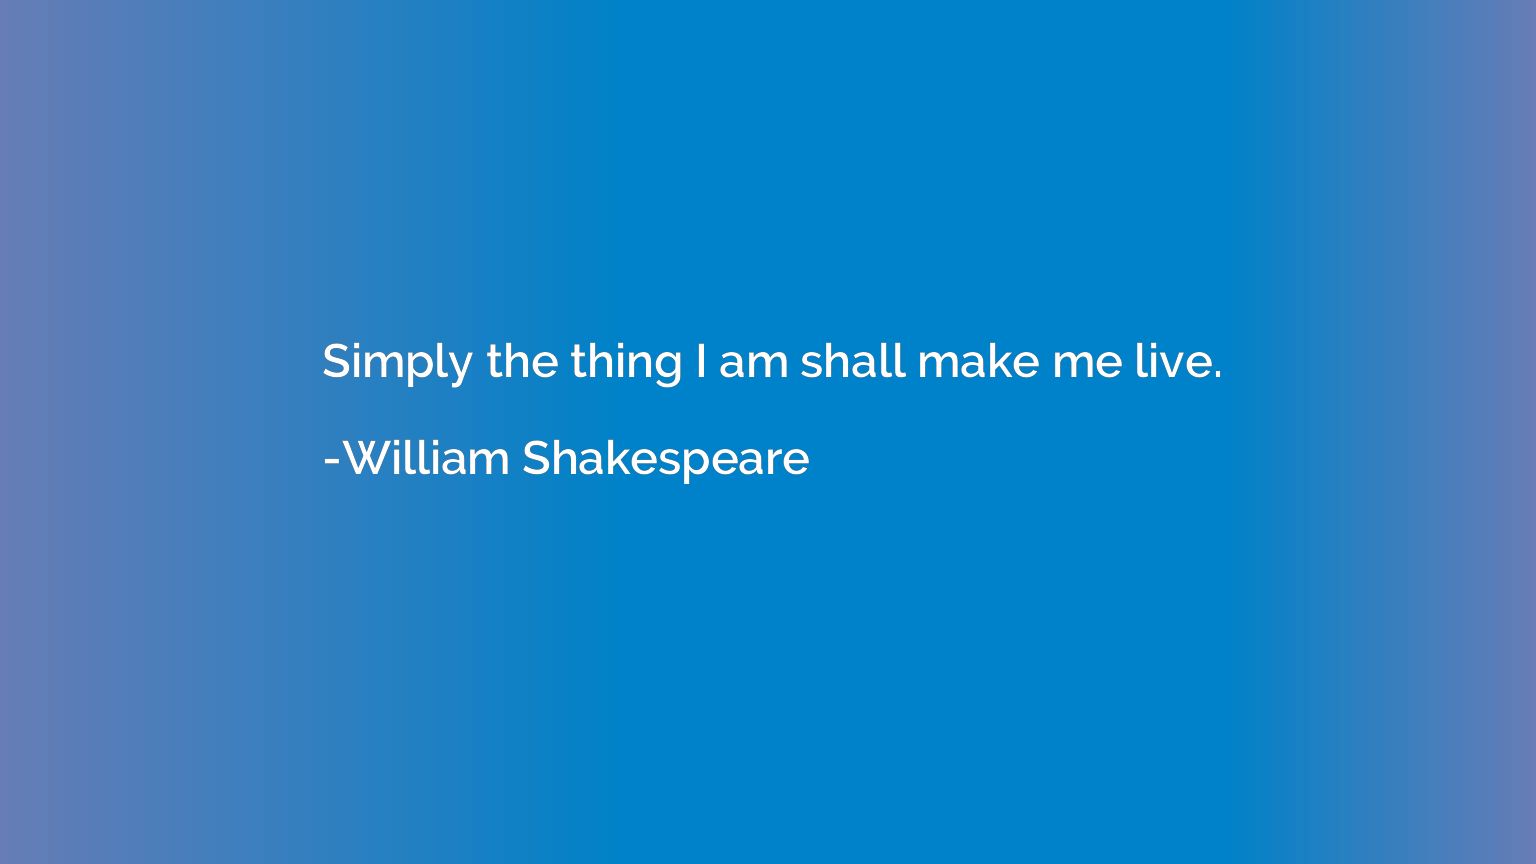 Simply the thing I am shall make me live.